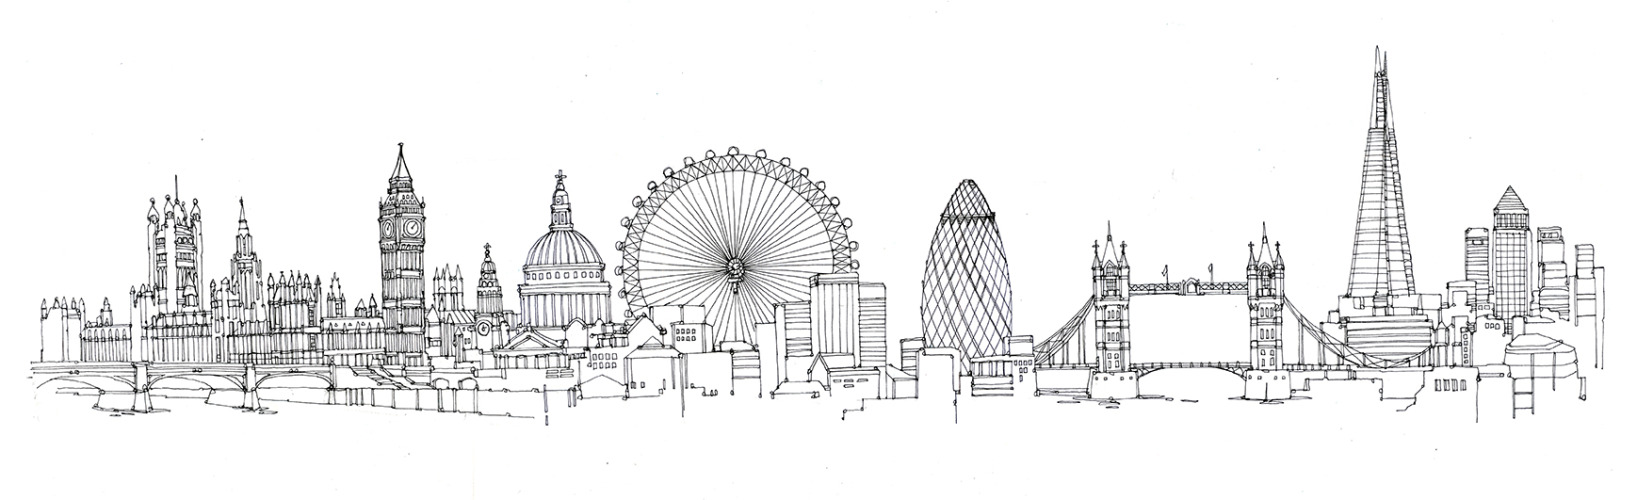 abidaker: London Skyline drawing for Leon Paul ... |